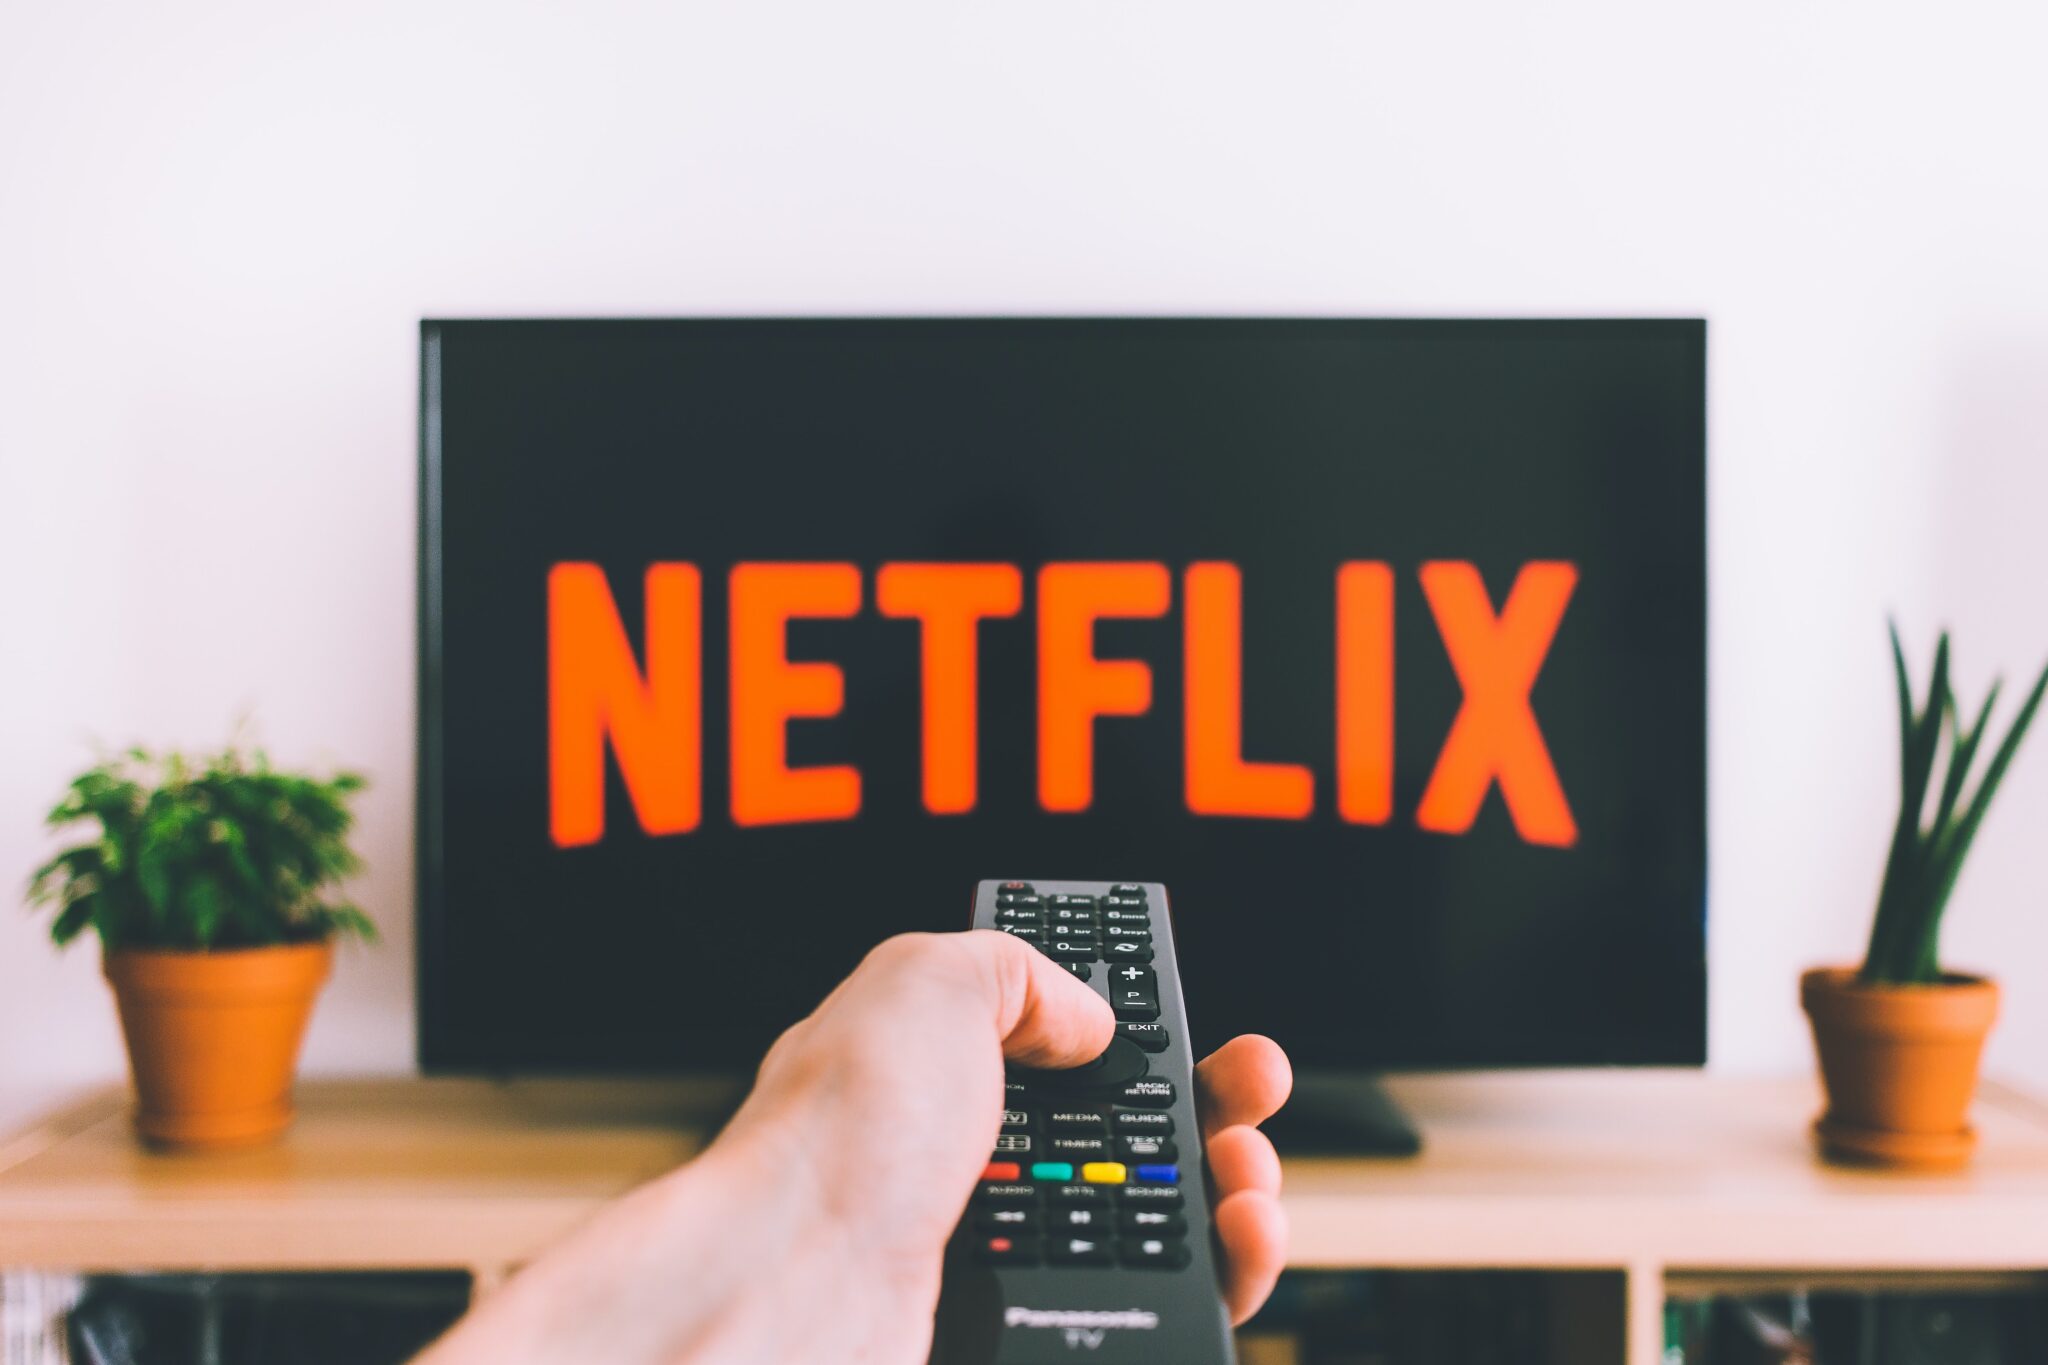 How to update Netflix on a Samsung TV?